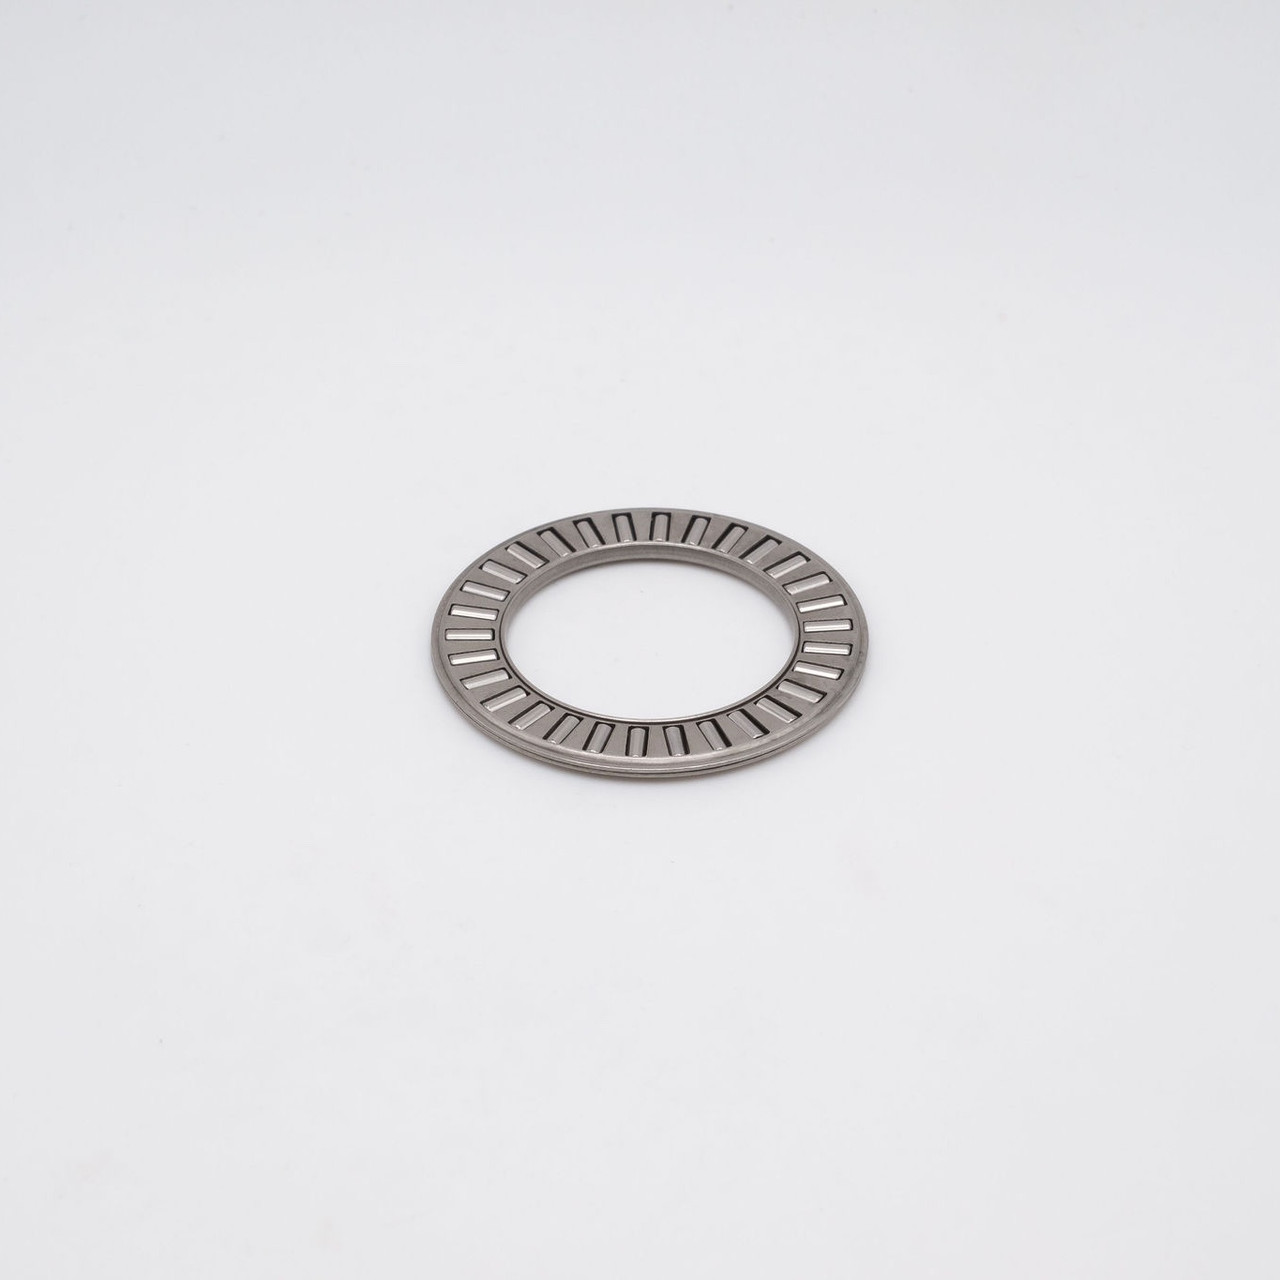 JD8856 Thrust Needle Roller Bearing 1x1-35/64x5/64 Top View